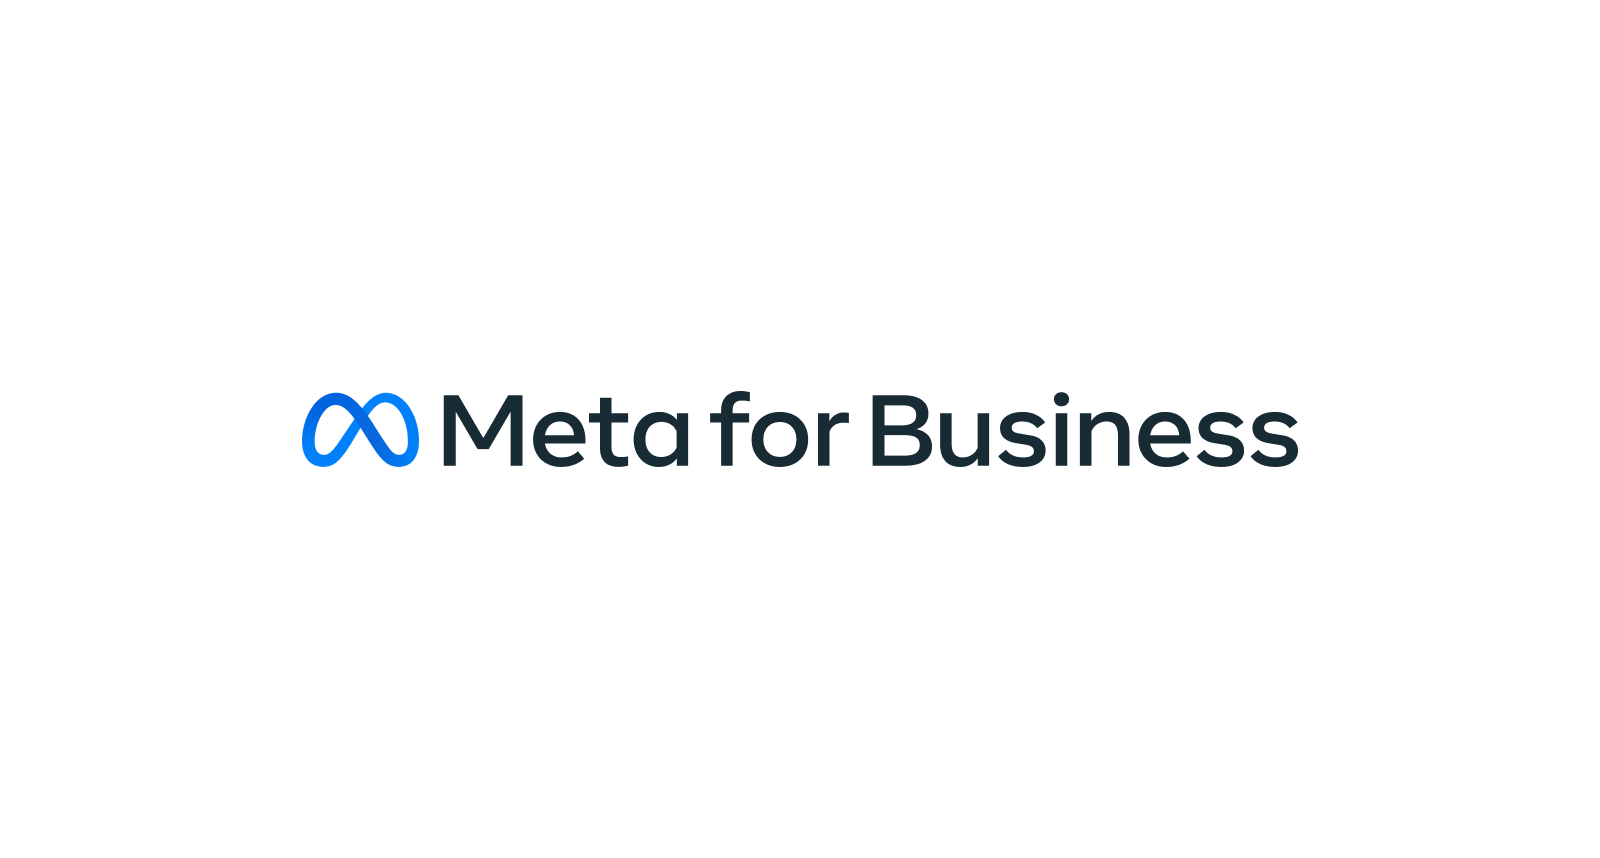 Facebook Meta Business Suite Not Working  Facebook Meta Suite Solution? 